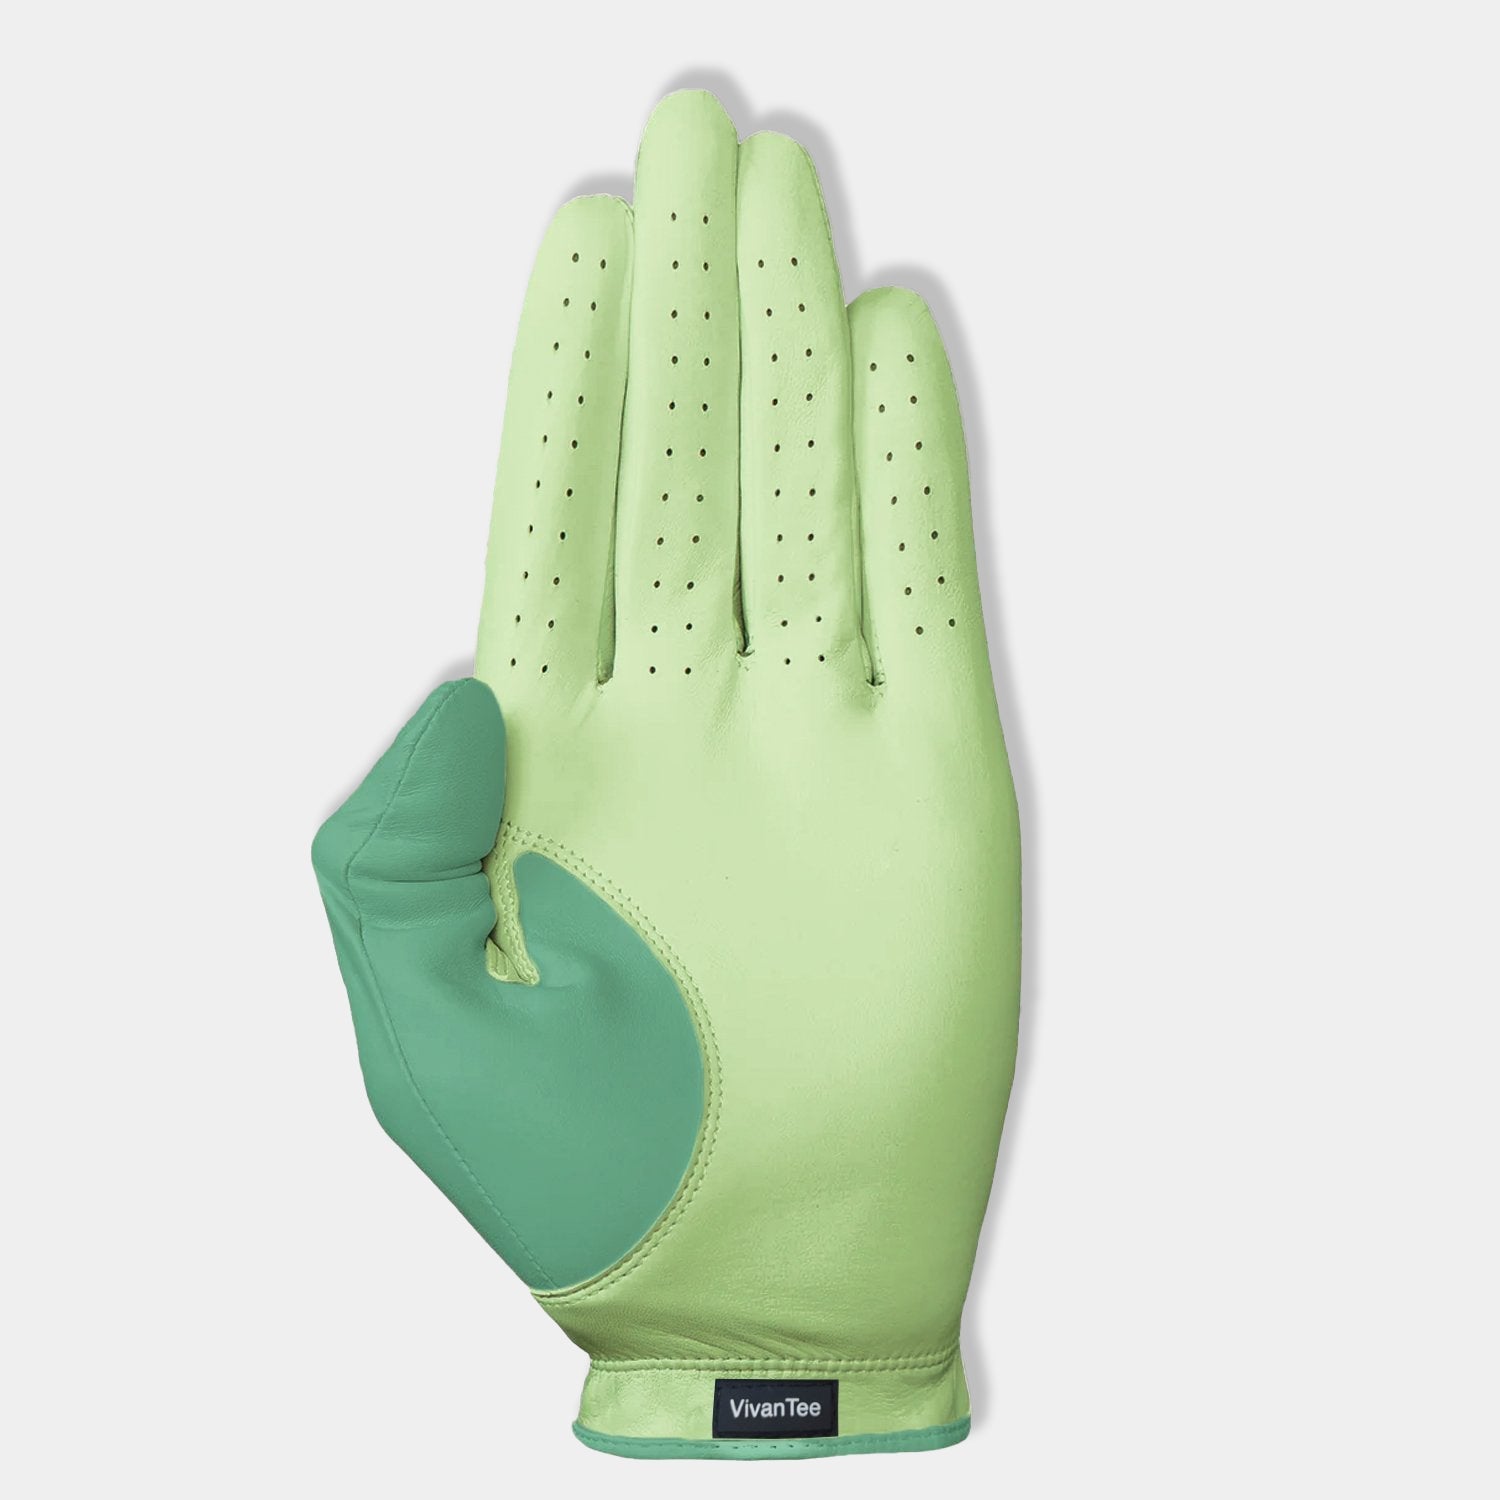 Bottom of women's Seaport Serenity green golf glove.